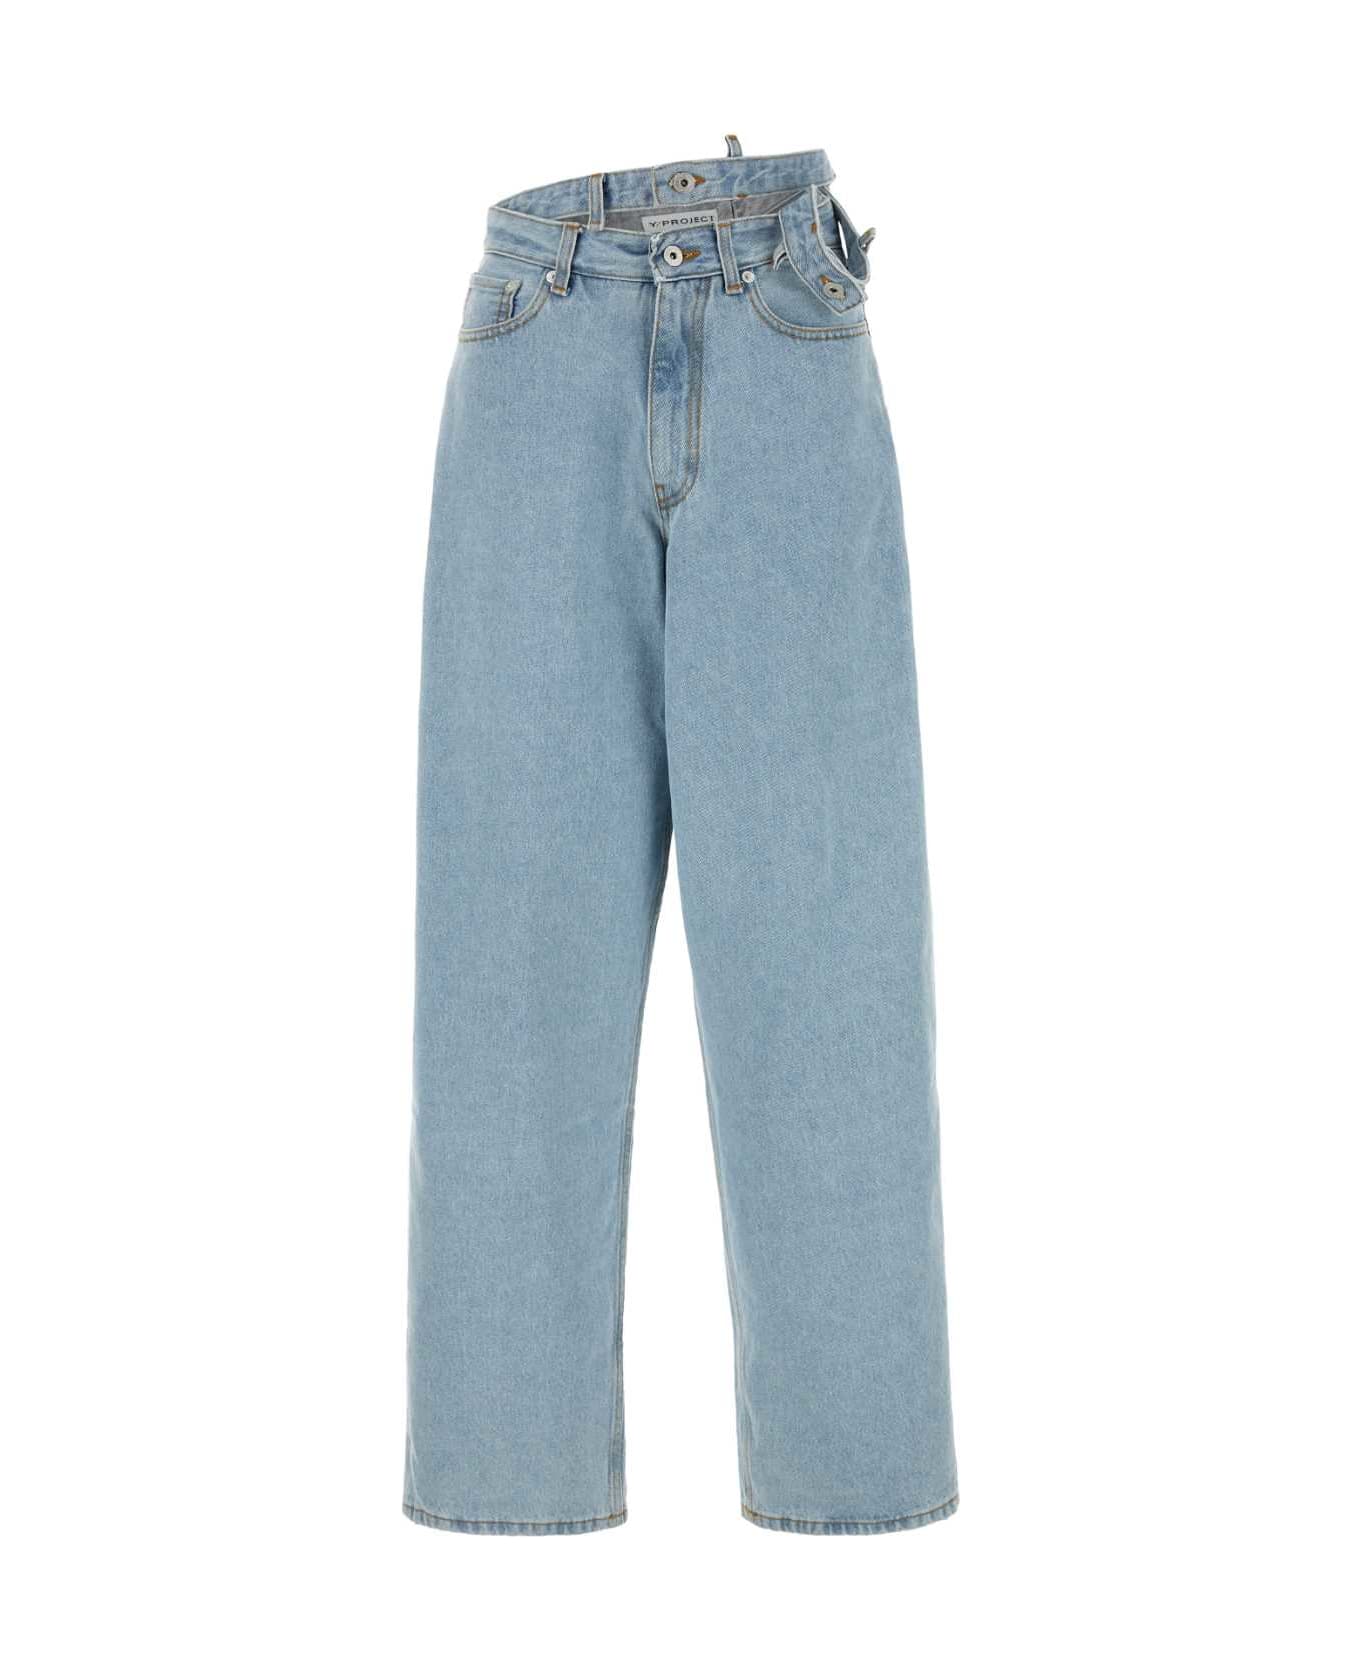 Y/Project Light Blue Denim Jeans - EVERGREEN ICE BLUE デニム